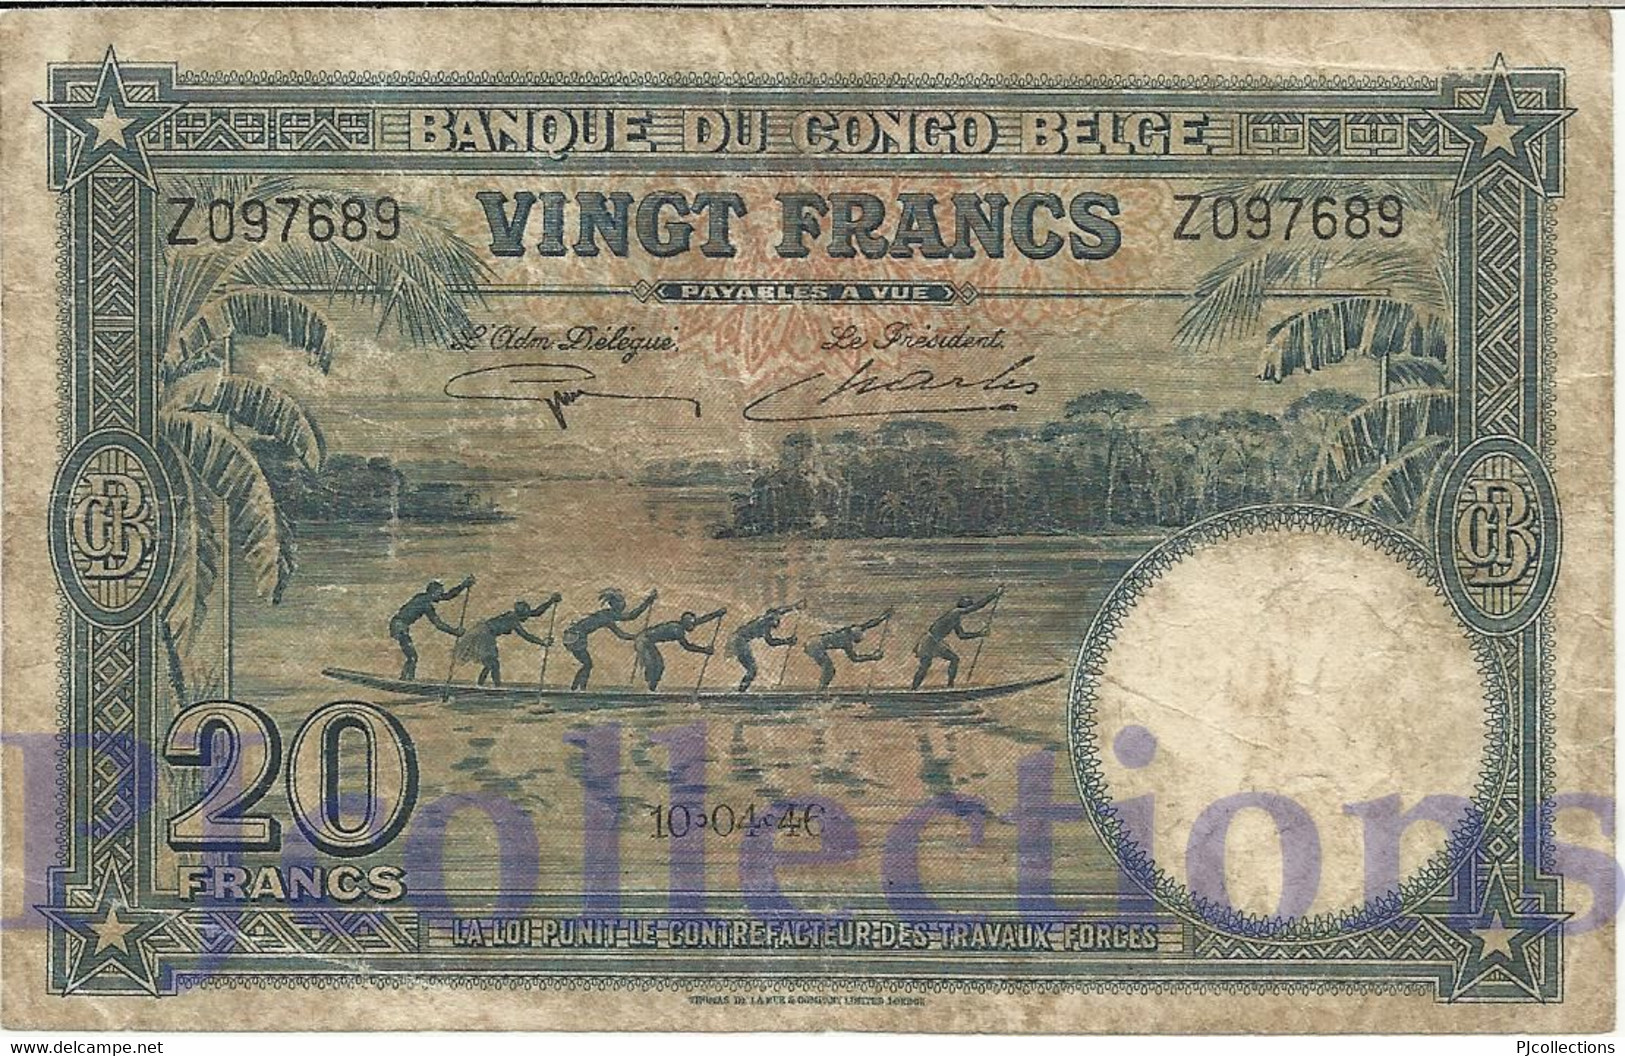 BELGIAN CONGO 20 FRANCS 1946 PICK 15E FINE - Belgian Congo Bank